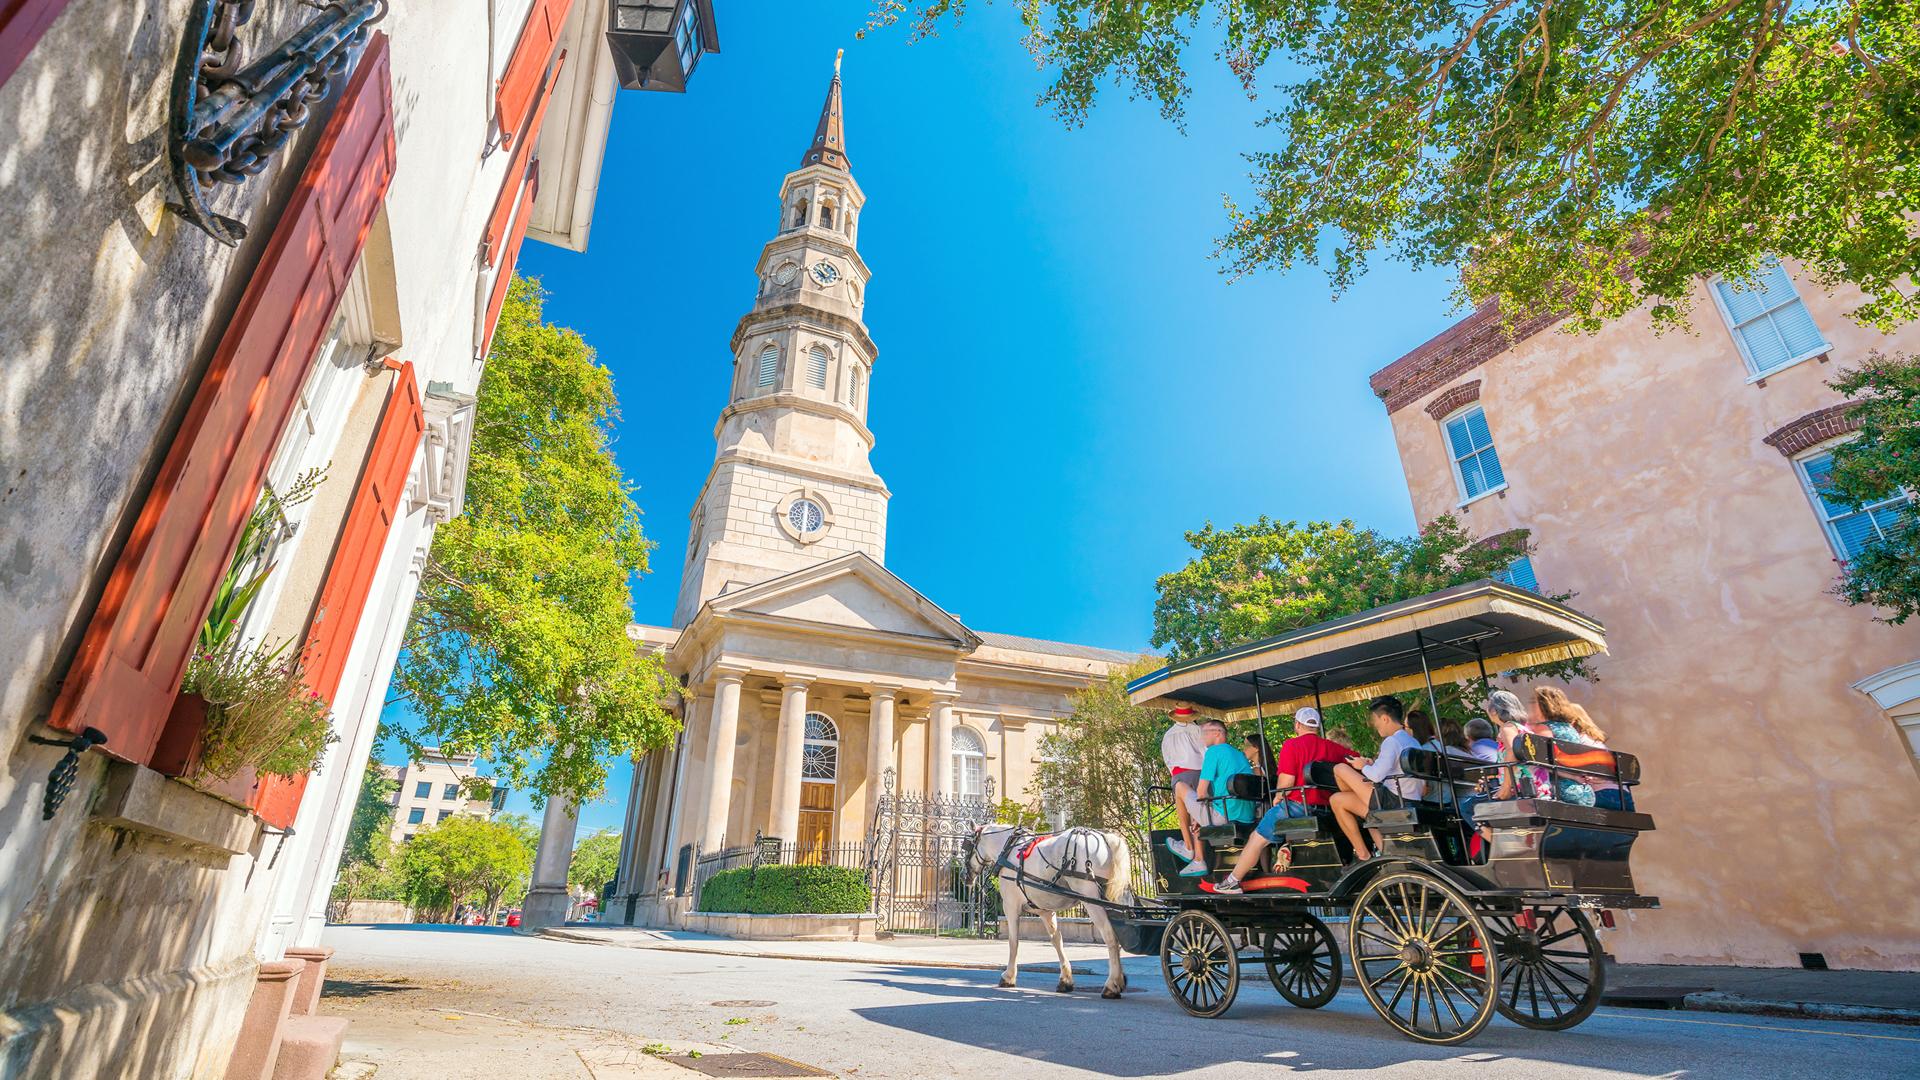 Historical downtown area of Charleston, South Carolina, USA.